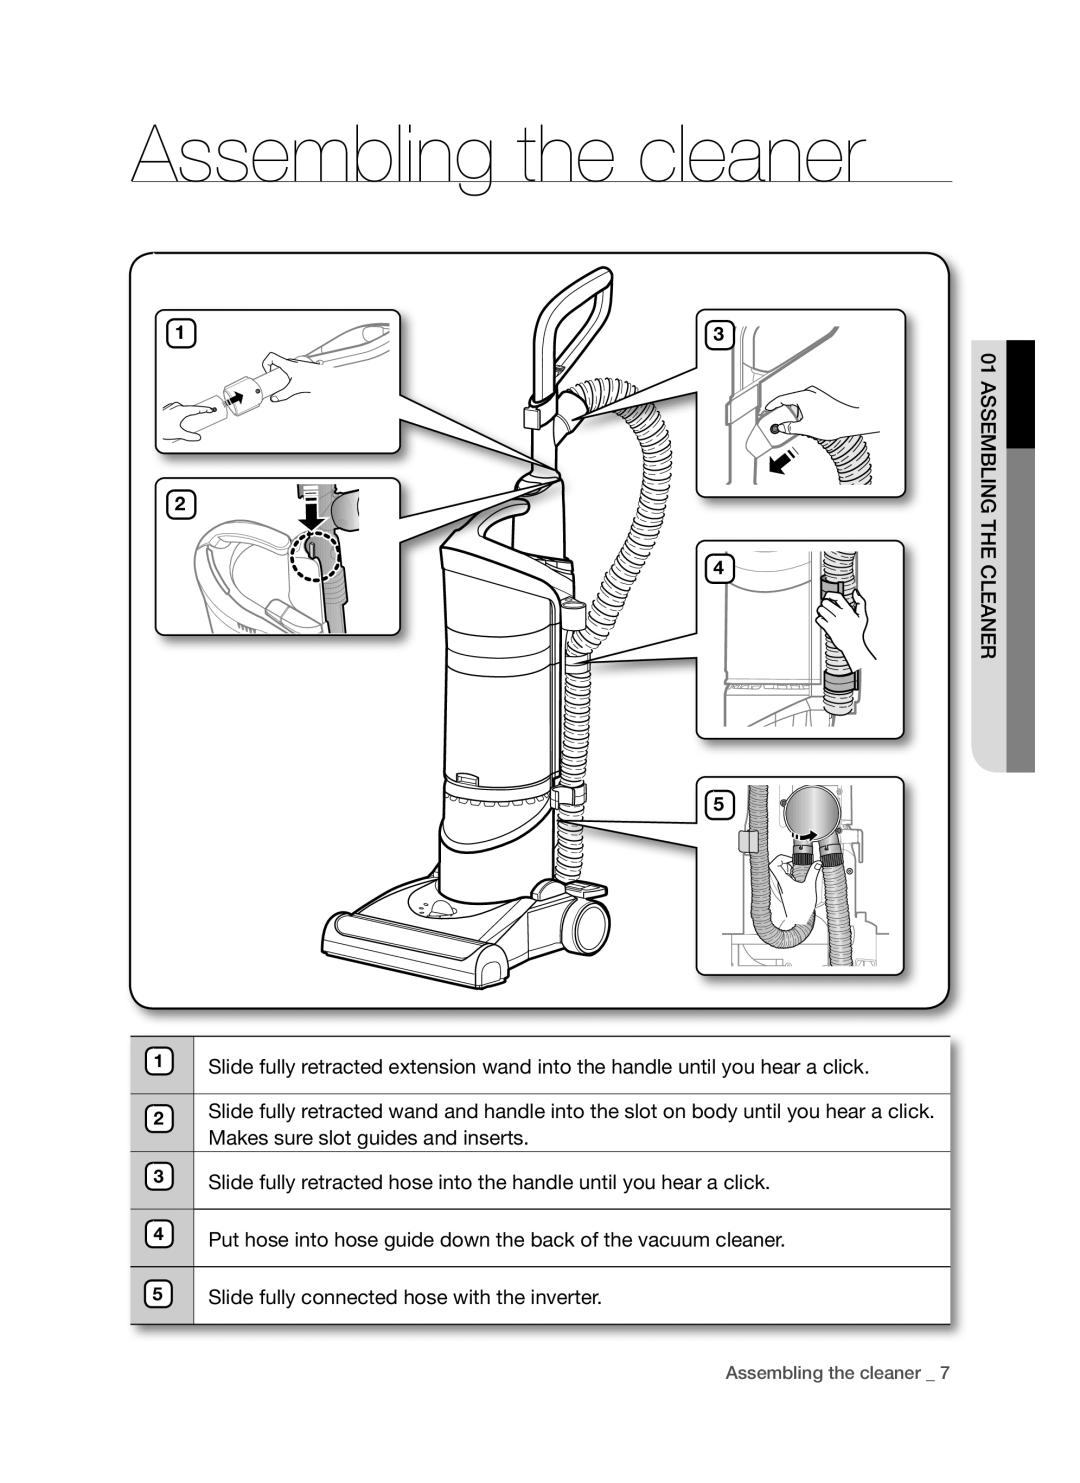 Samsung DJ68-00264B, SU9380 user manual Assembling the cleaner, c hlEANERTg 01 ASSEMblIN 